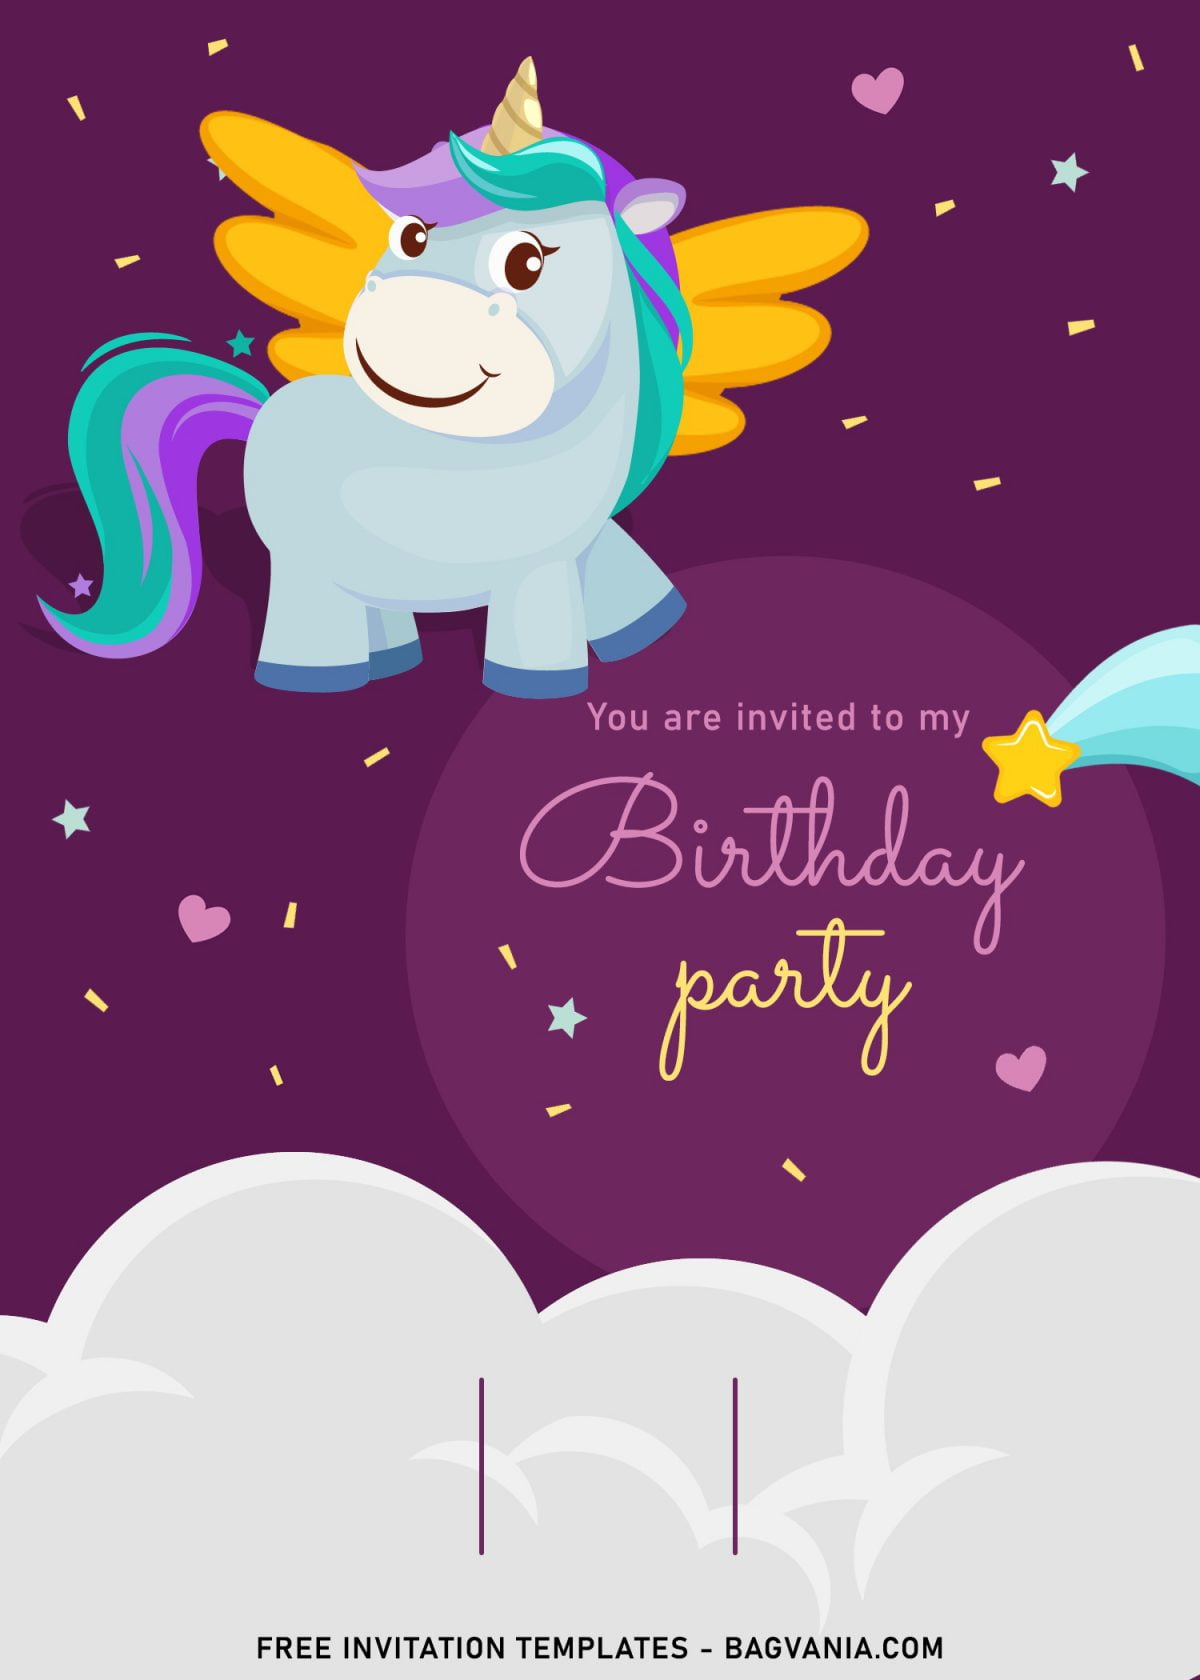 7+ Magical Rainbow Unicorn Birthday Invitation Templates For Kids Birthday Party and has Rainbow haired Unicorn